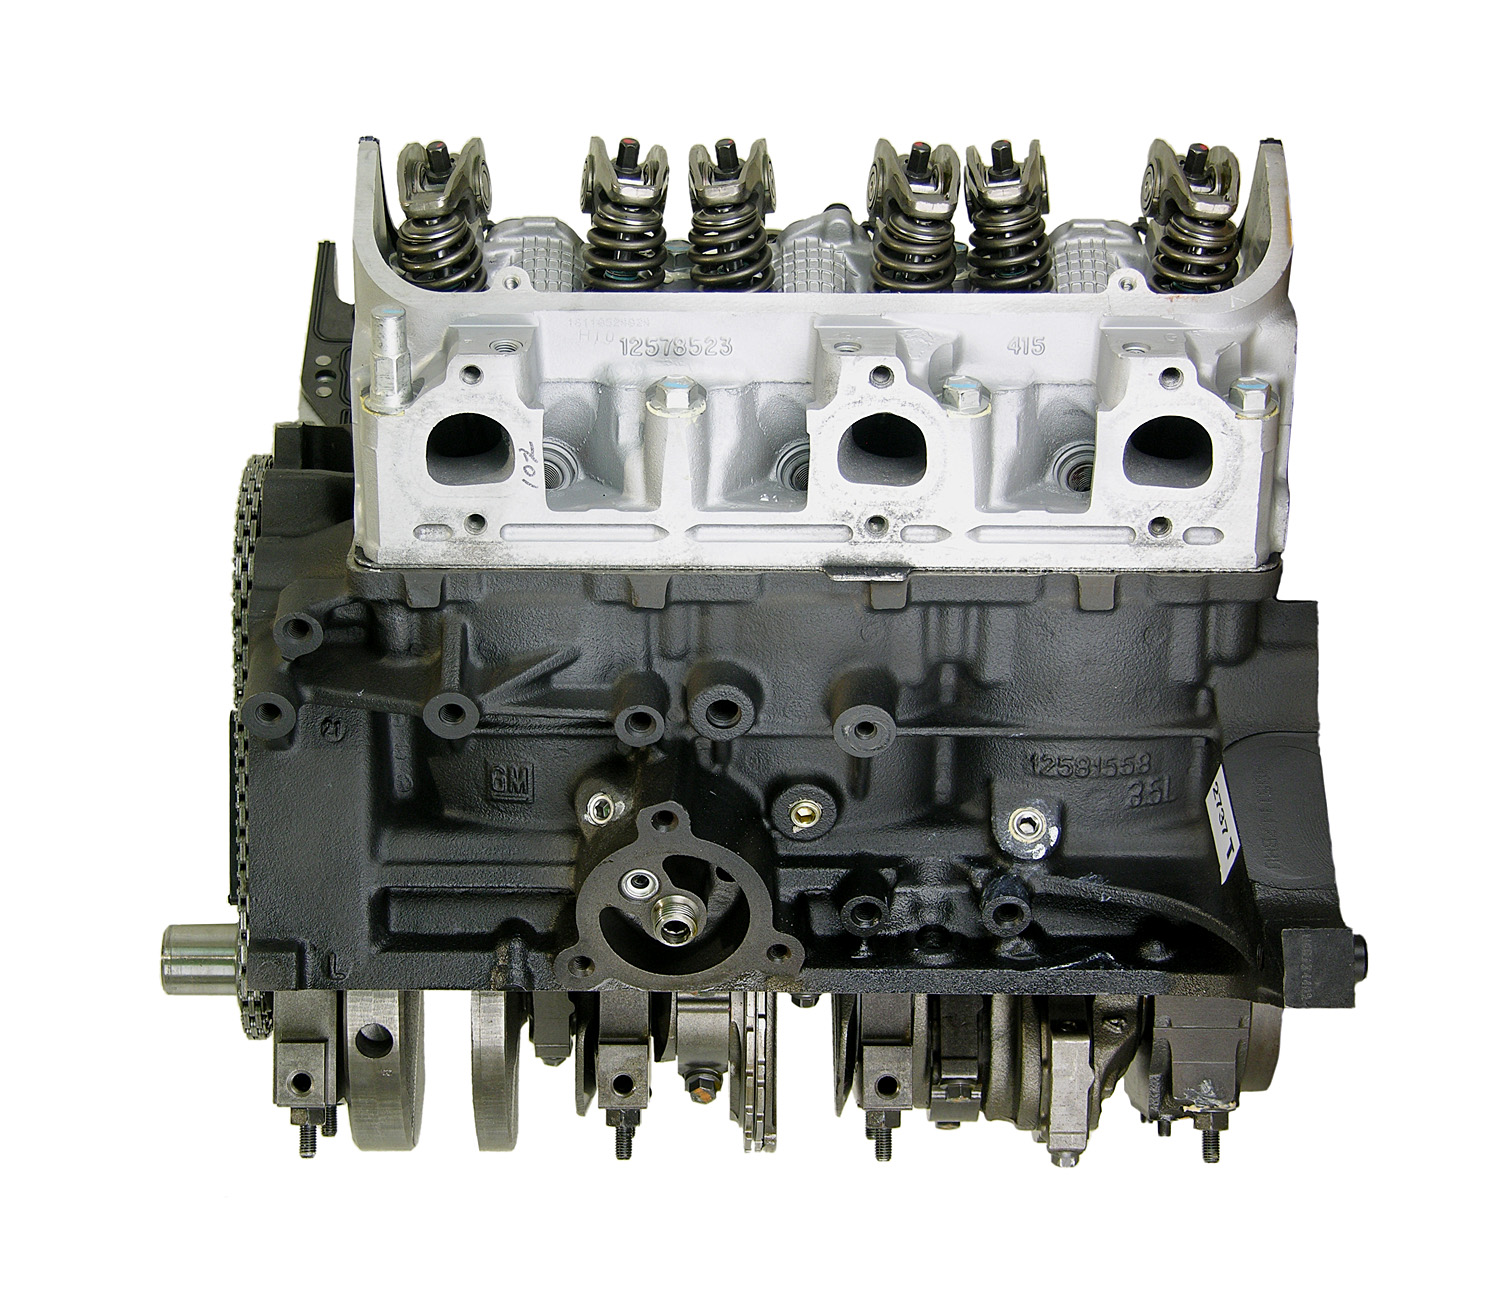 Chevy 3.5L V6 Remanufactured Engine - 2004-2006